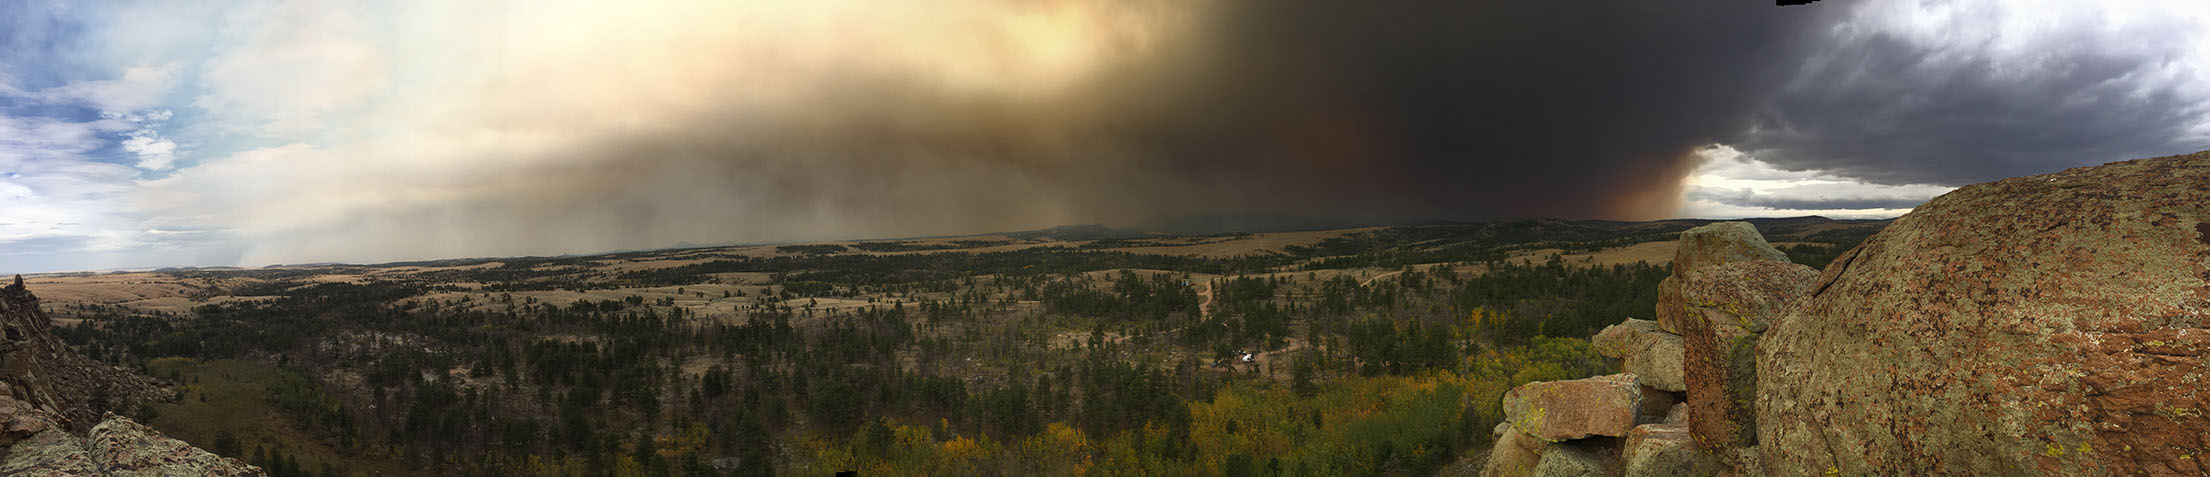 A panorama of a cloud of smoke